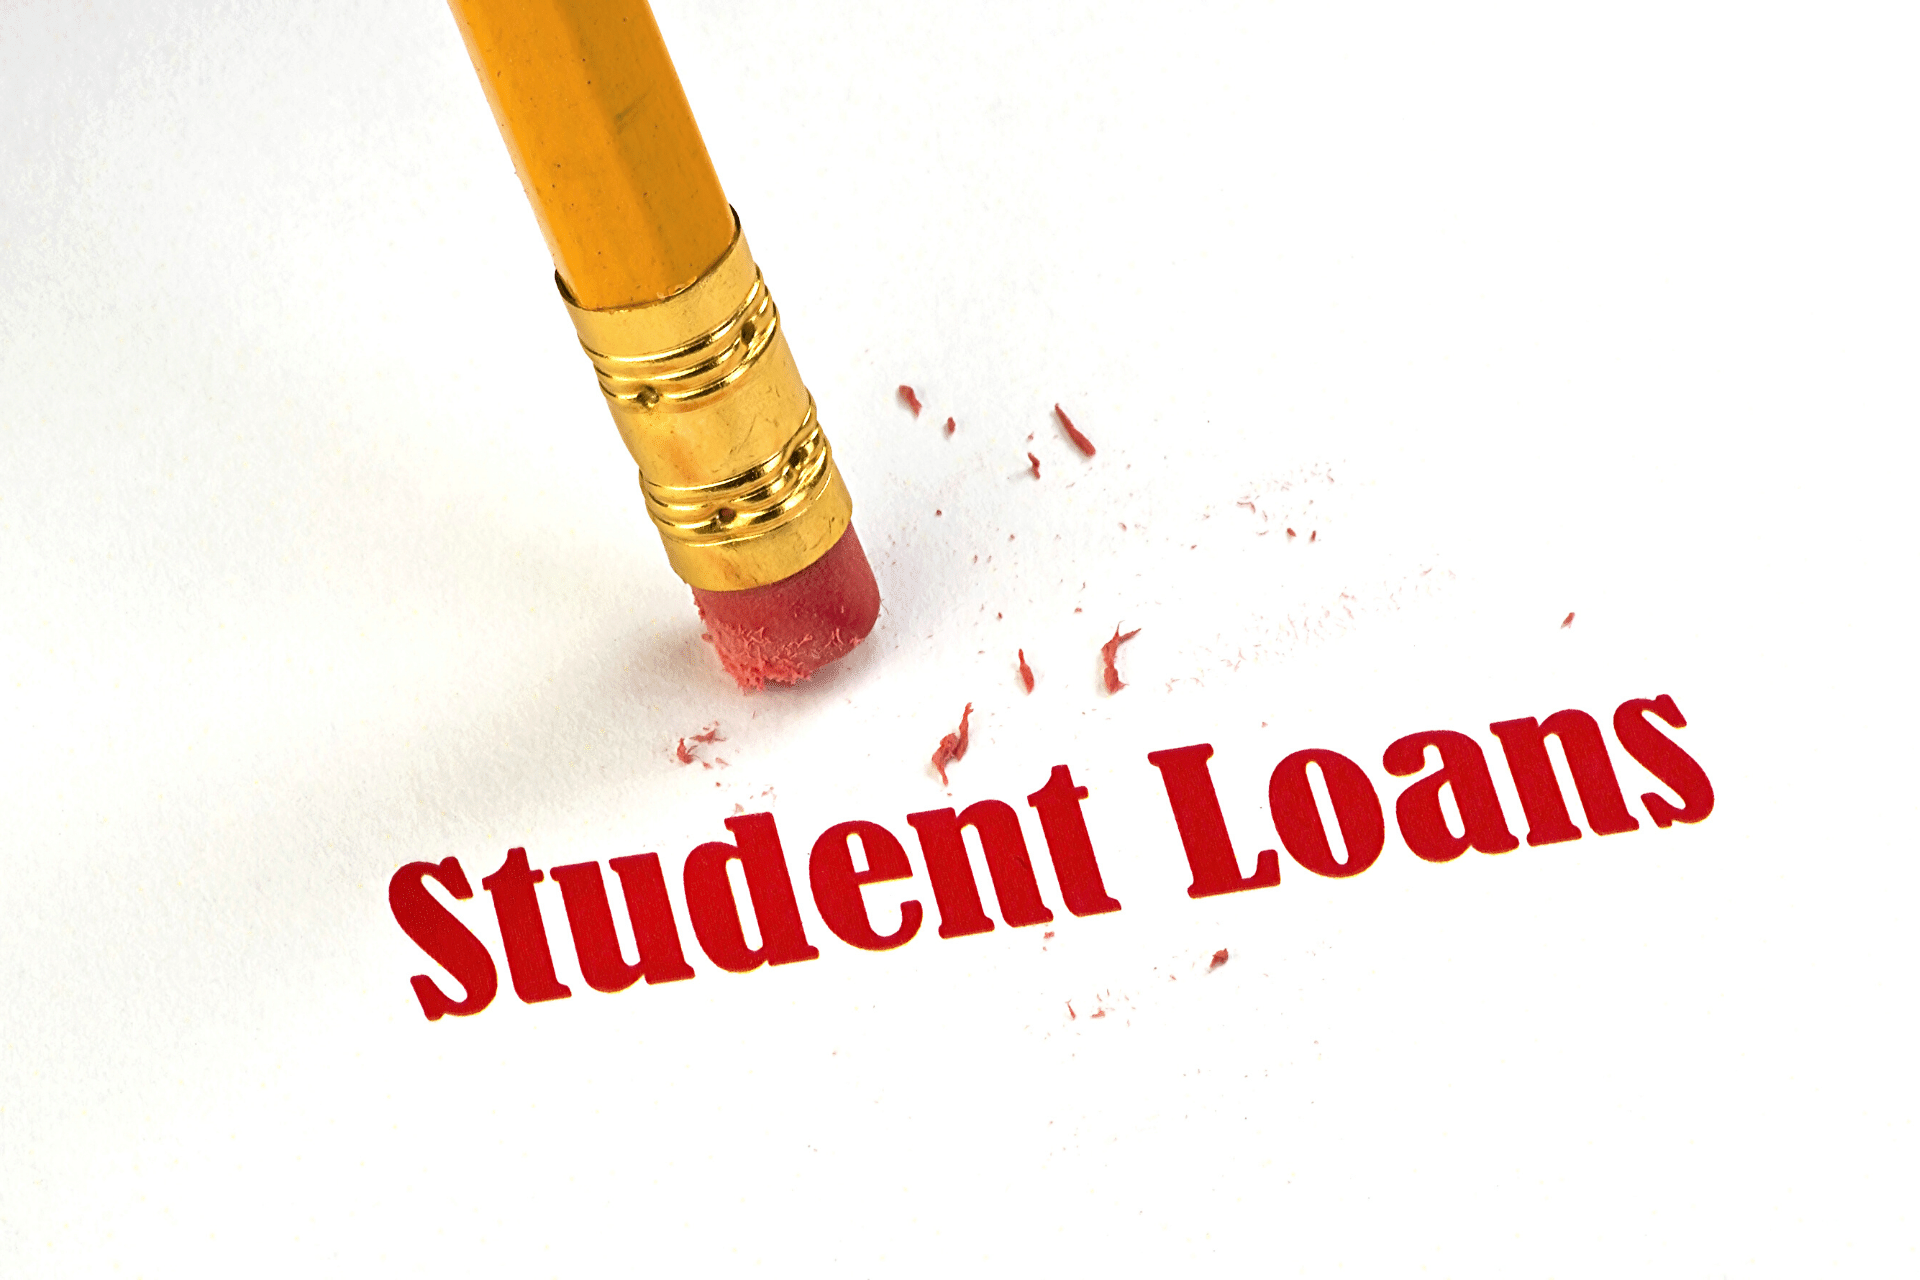 Pencil erasing the phrase, "student loans".